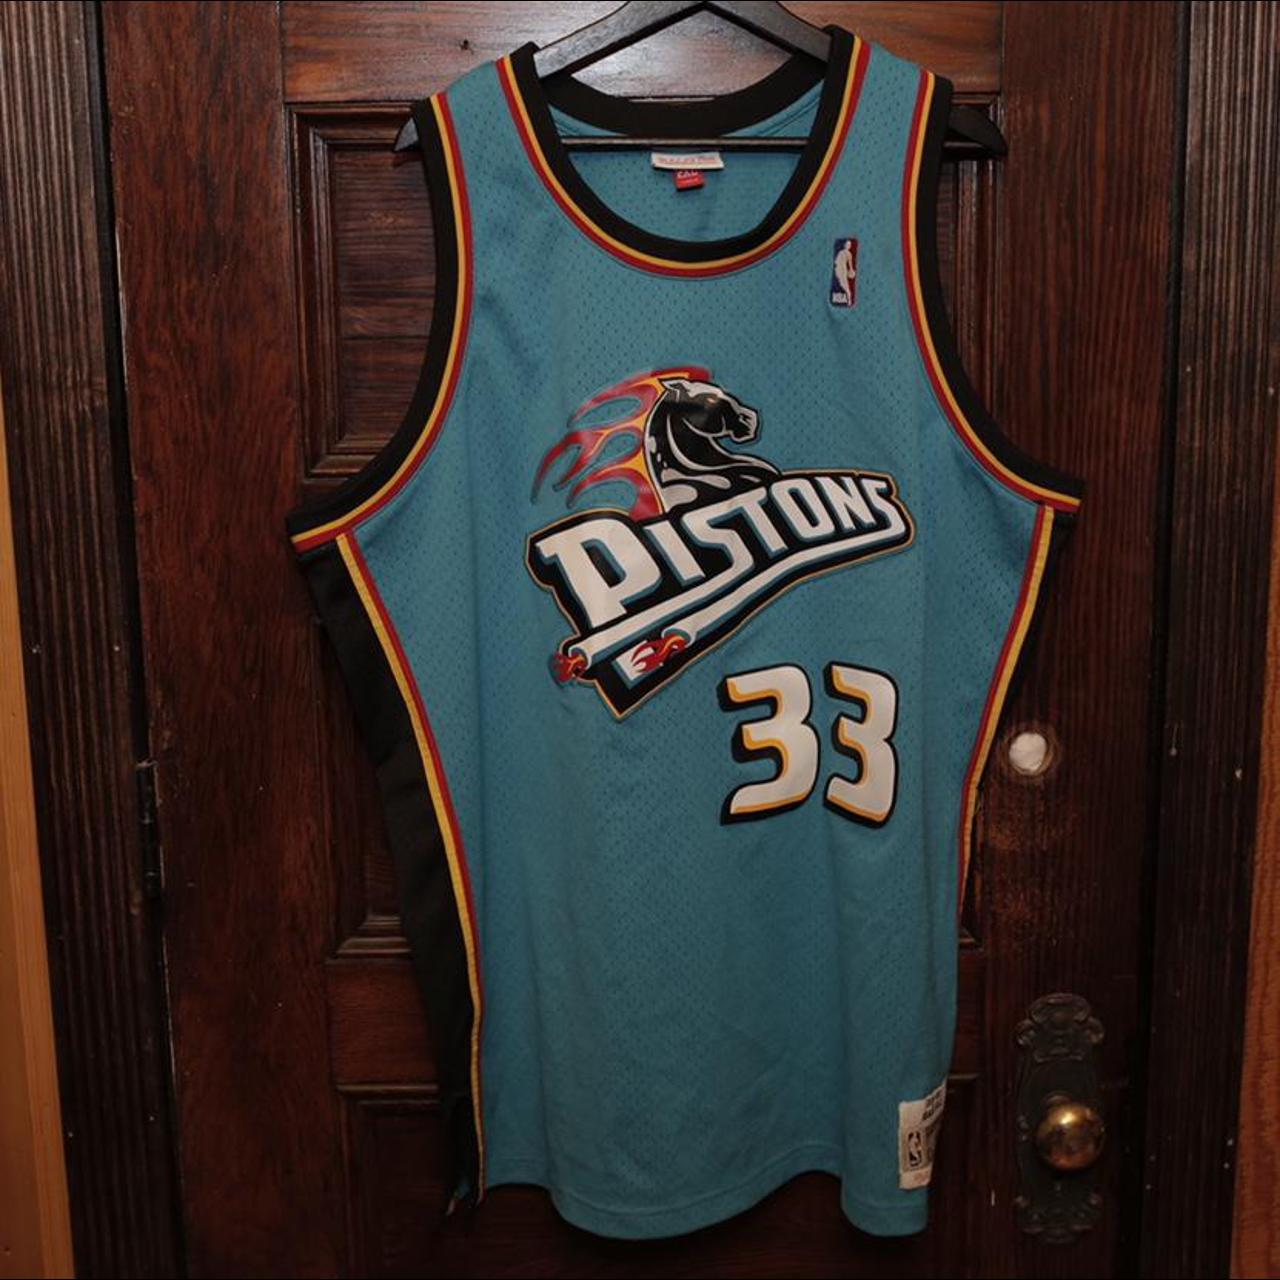 NBA Detroit Pistons #33 Hill Red Champion Jersey - Depop